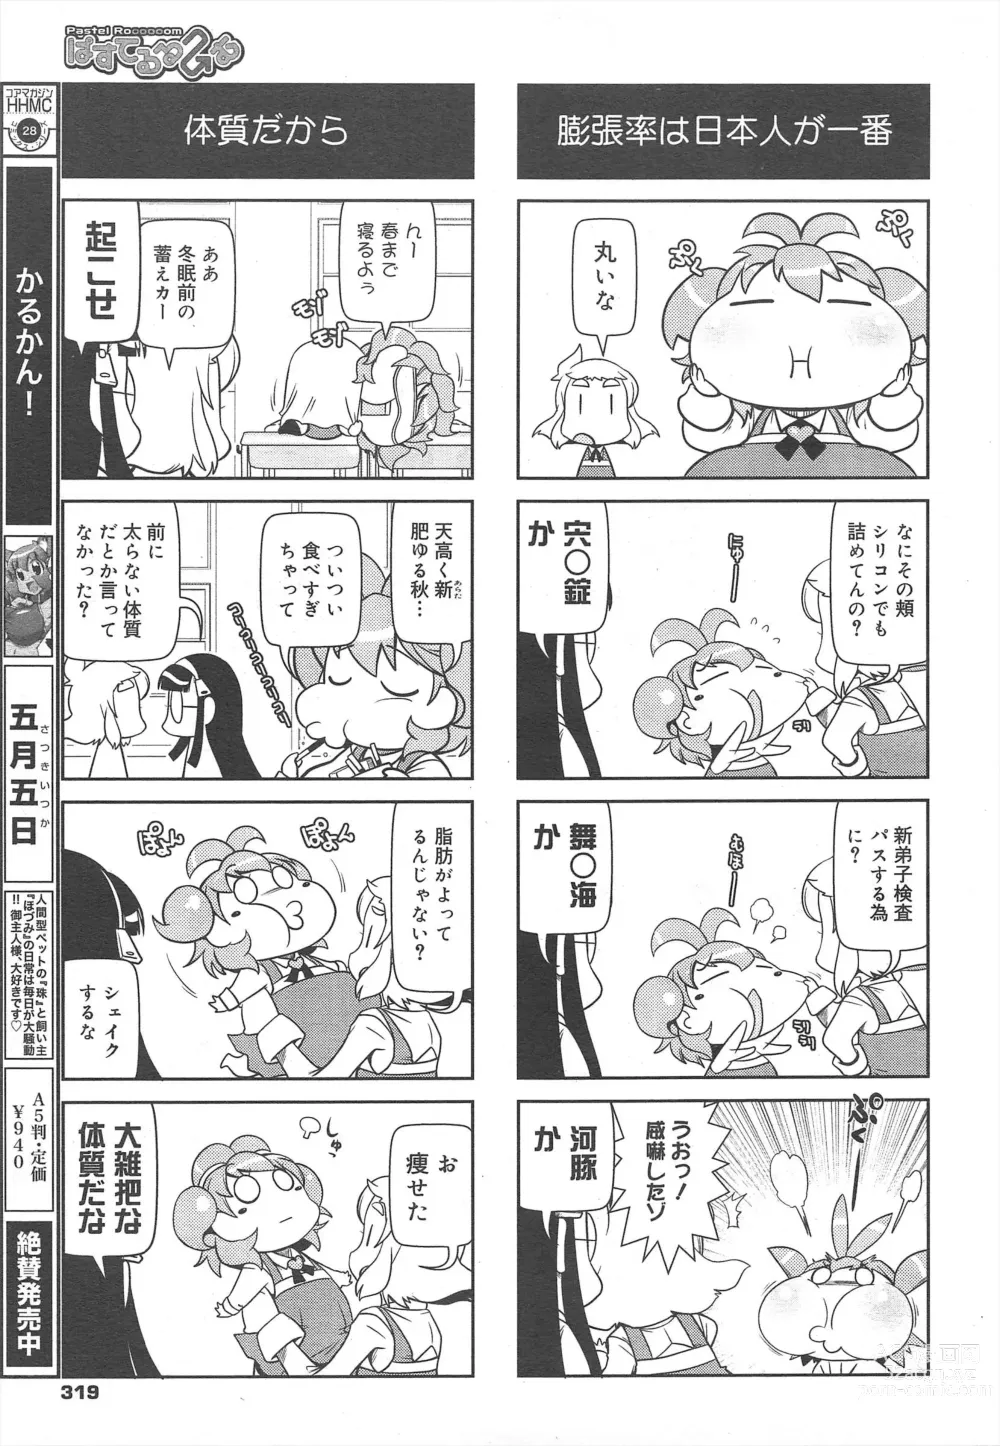 Page 319 of manga COMIC Megamilk 2011-12 Vol.18